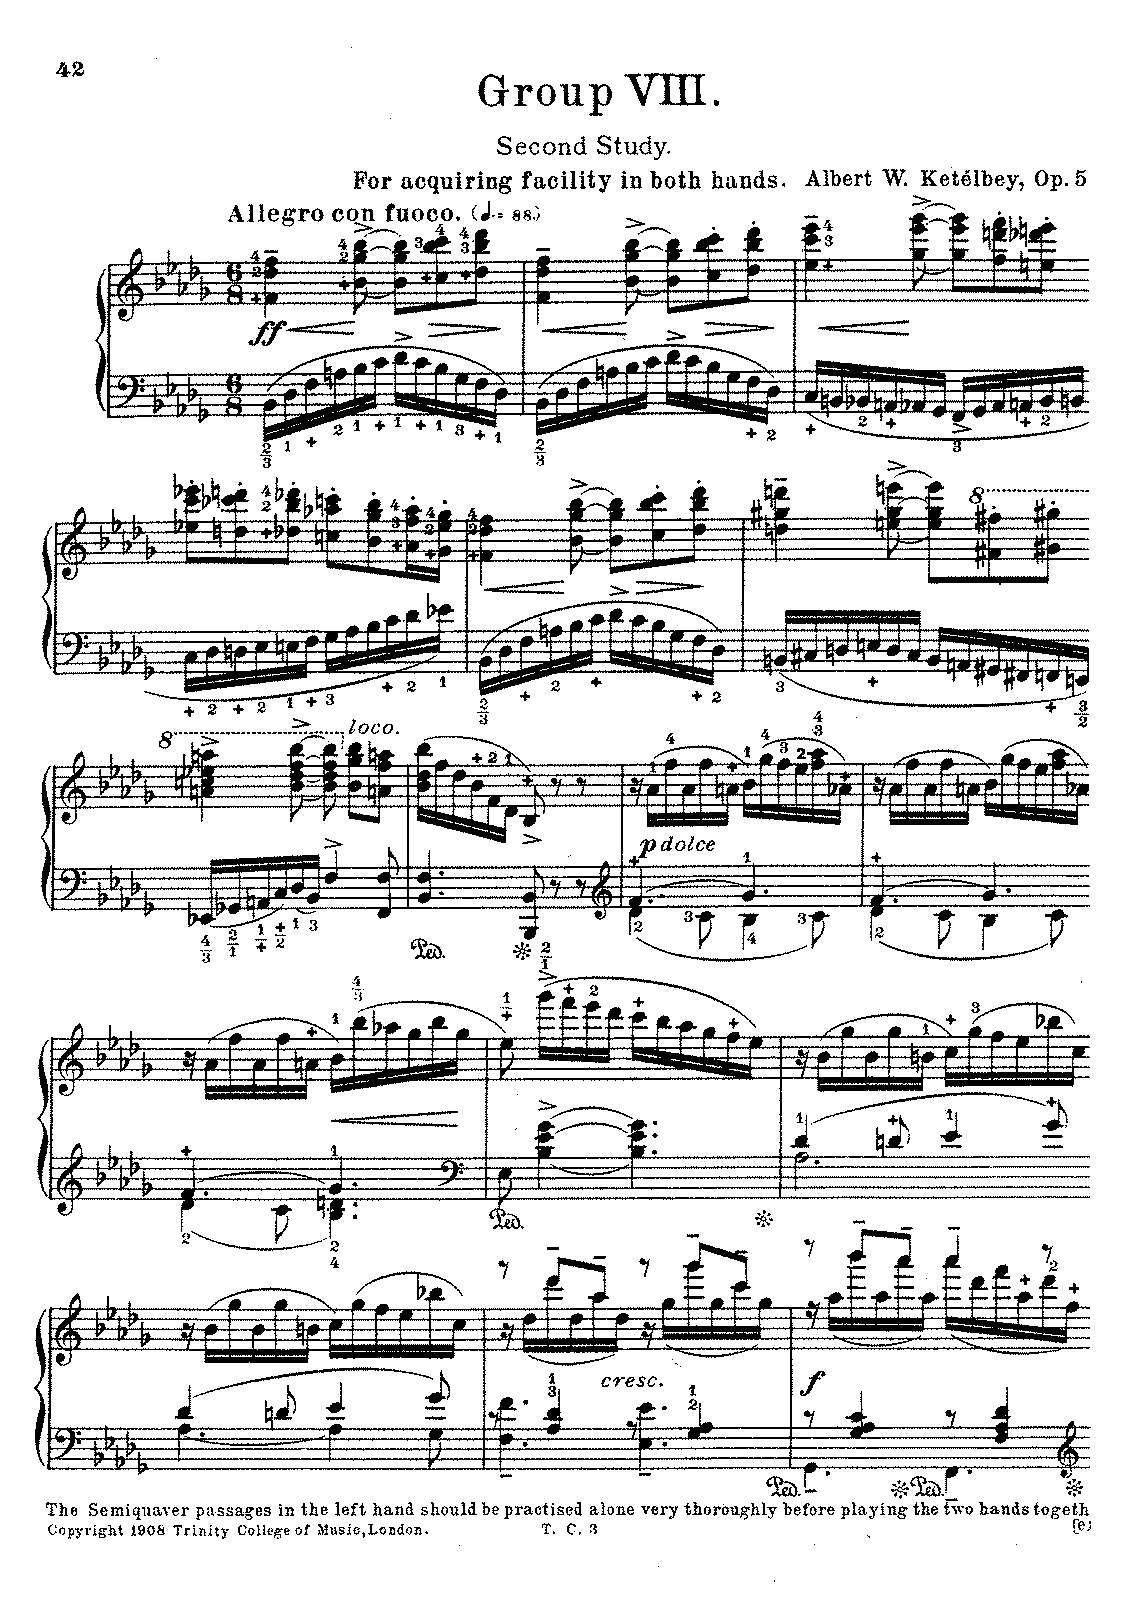 Study, Op.5 (Ketèlbey, Albert William) - IMSLP: Free Sheet Music PDF